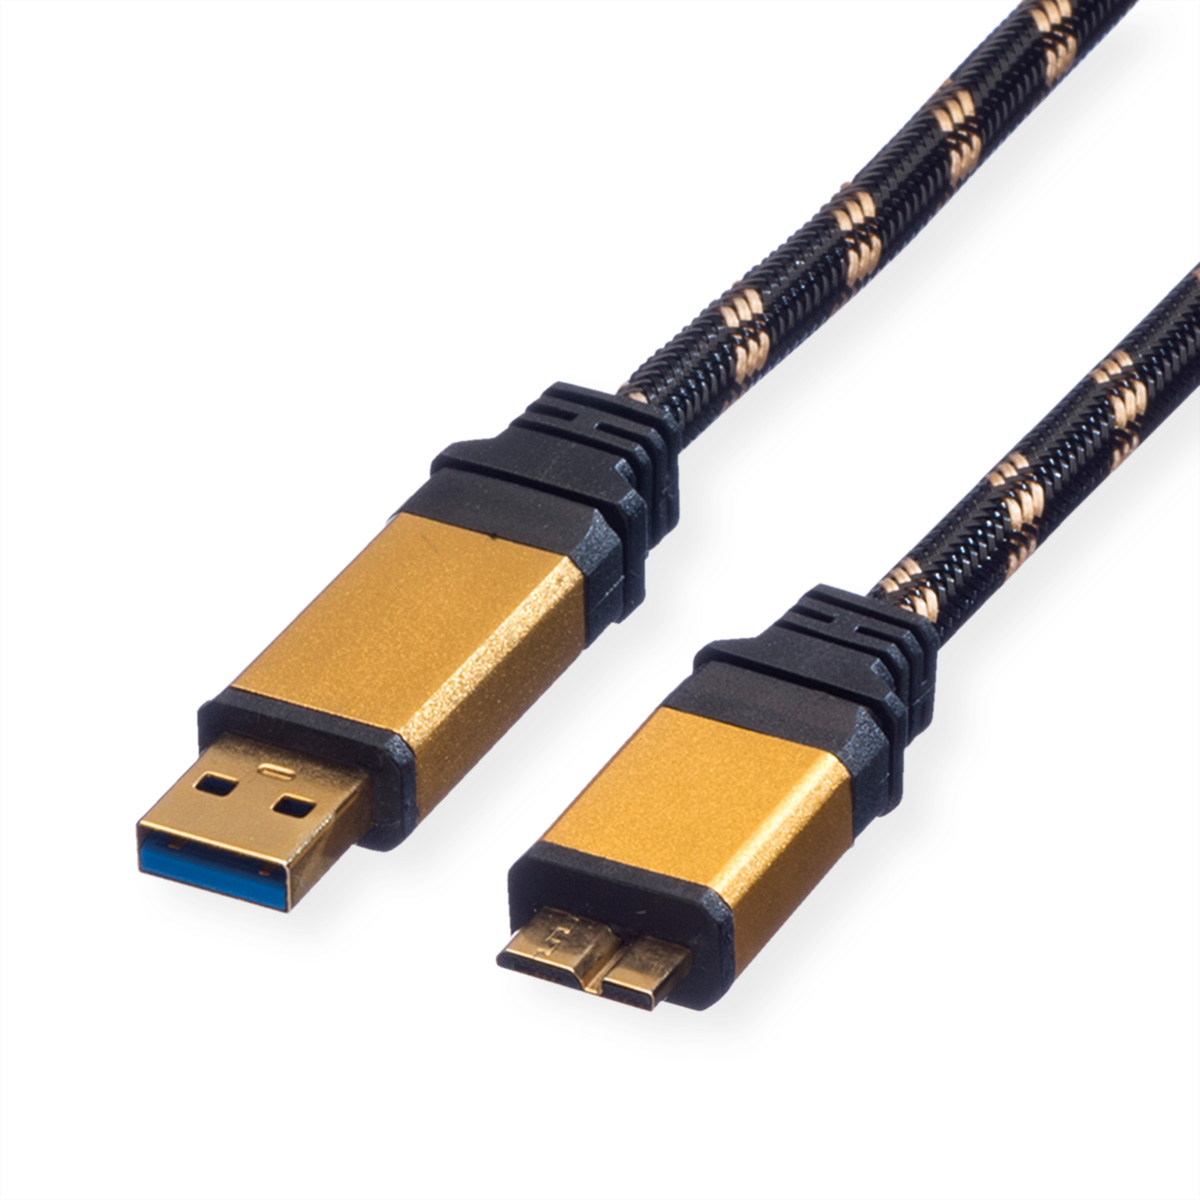 ROLINE GOLD USB 3.2 B, Kabel, 3.2 Gen USB 1 - ST/ST USB Micro Micro A Kabel